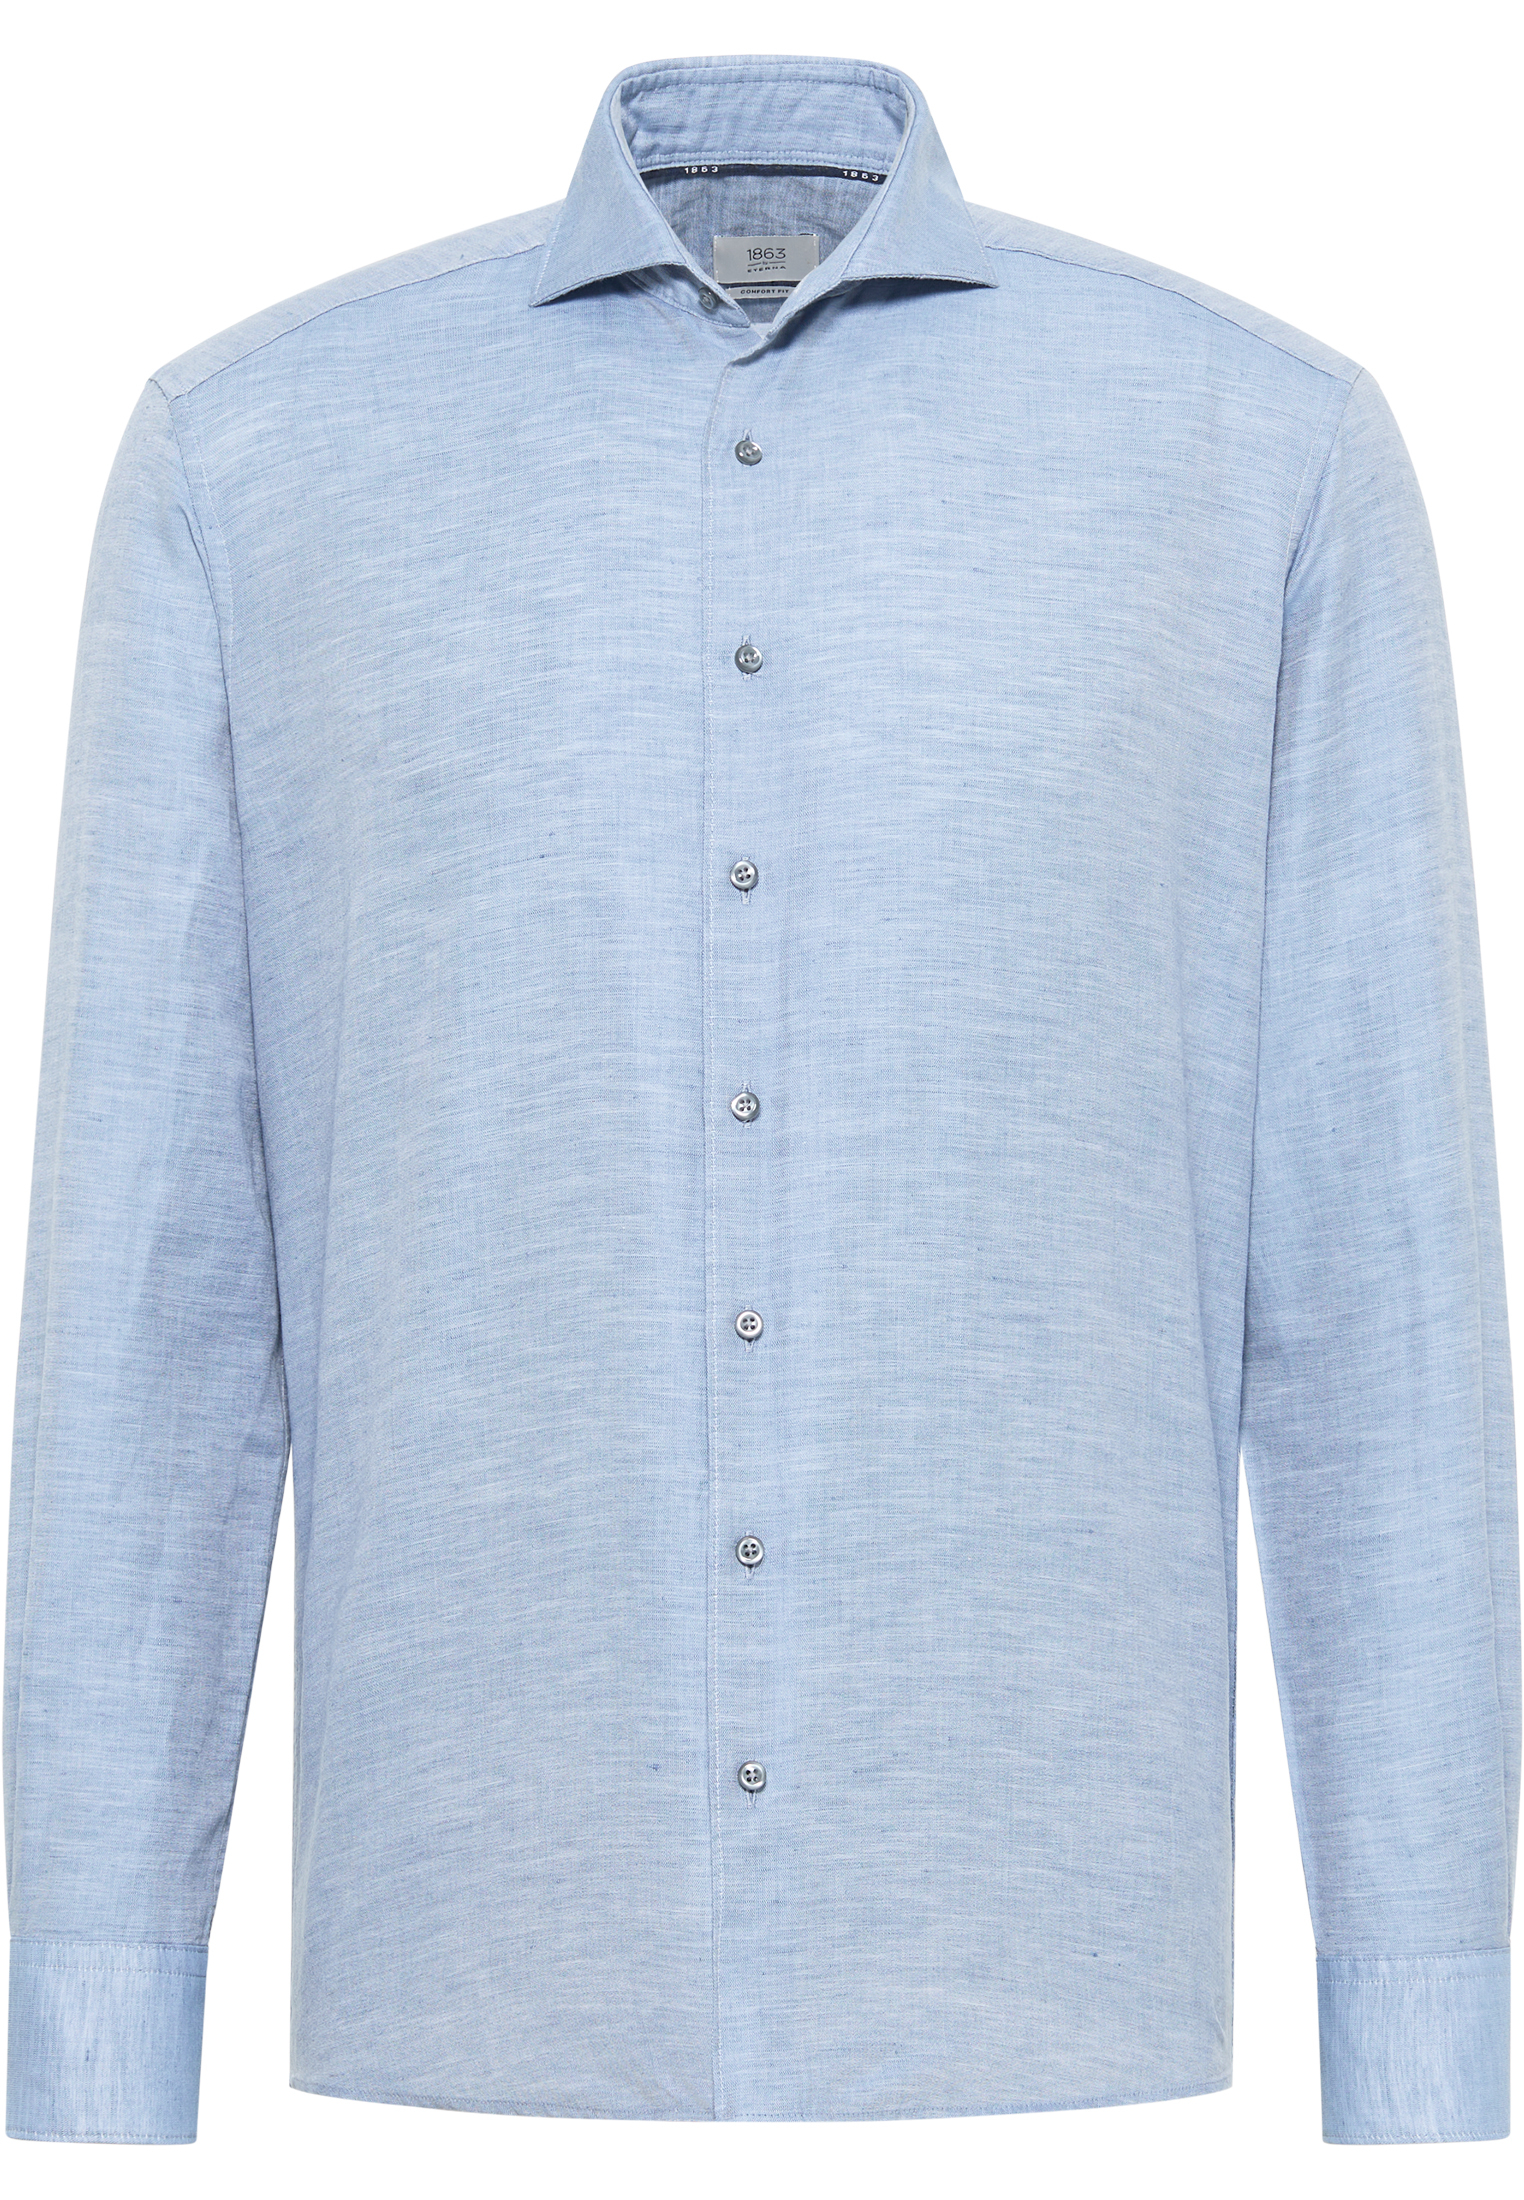 COMFORT FIT Linen Shirt in blue plain